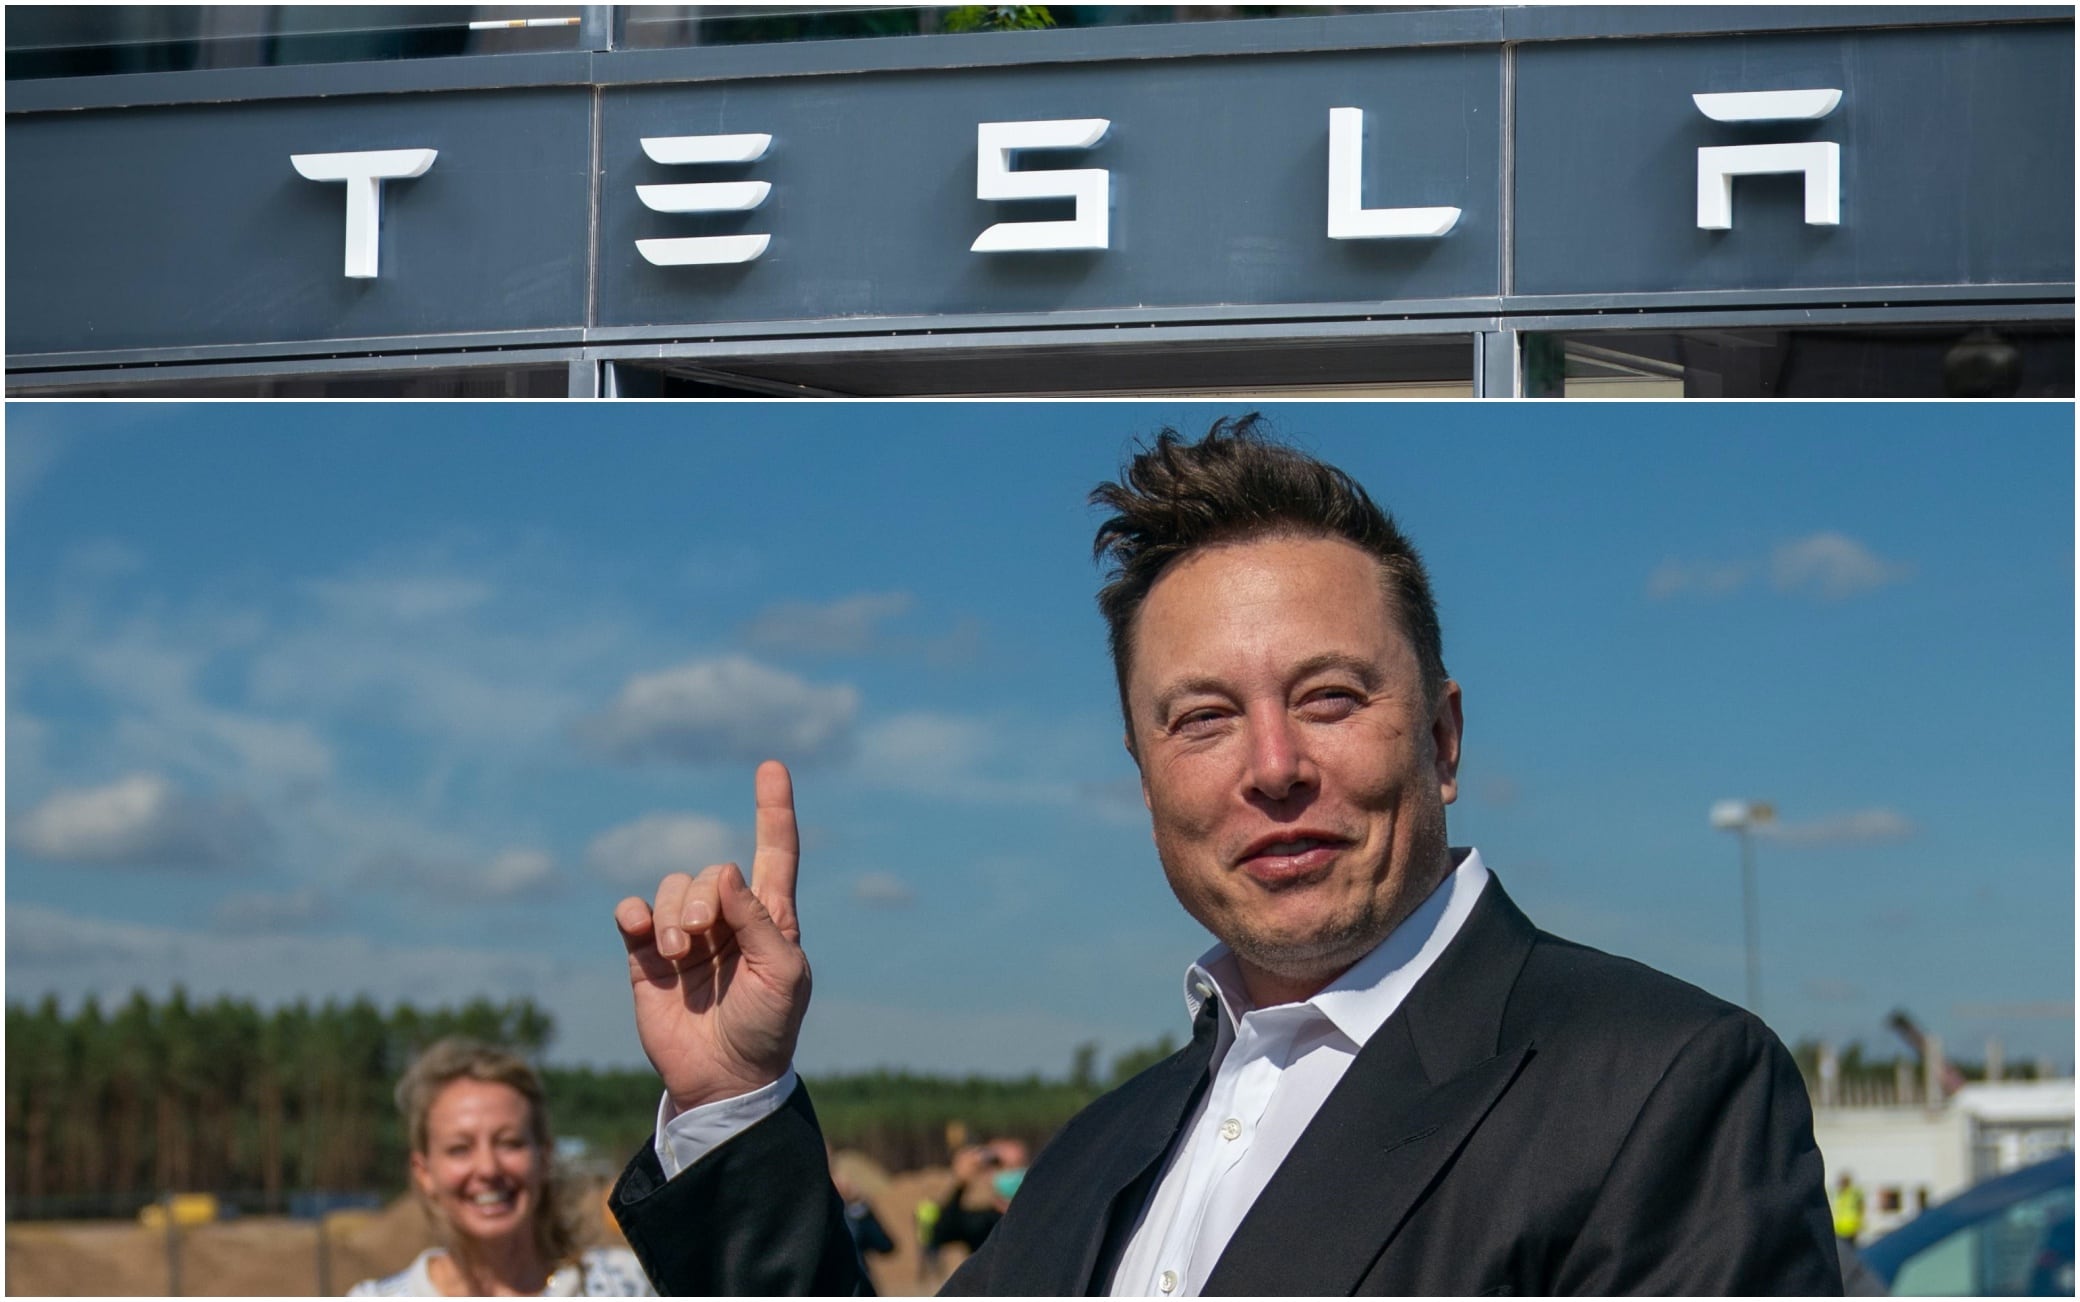 Elon Musk sells Tesla stock for $ 5 billion after Twitter poll